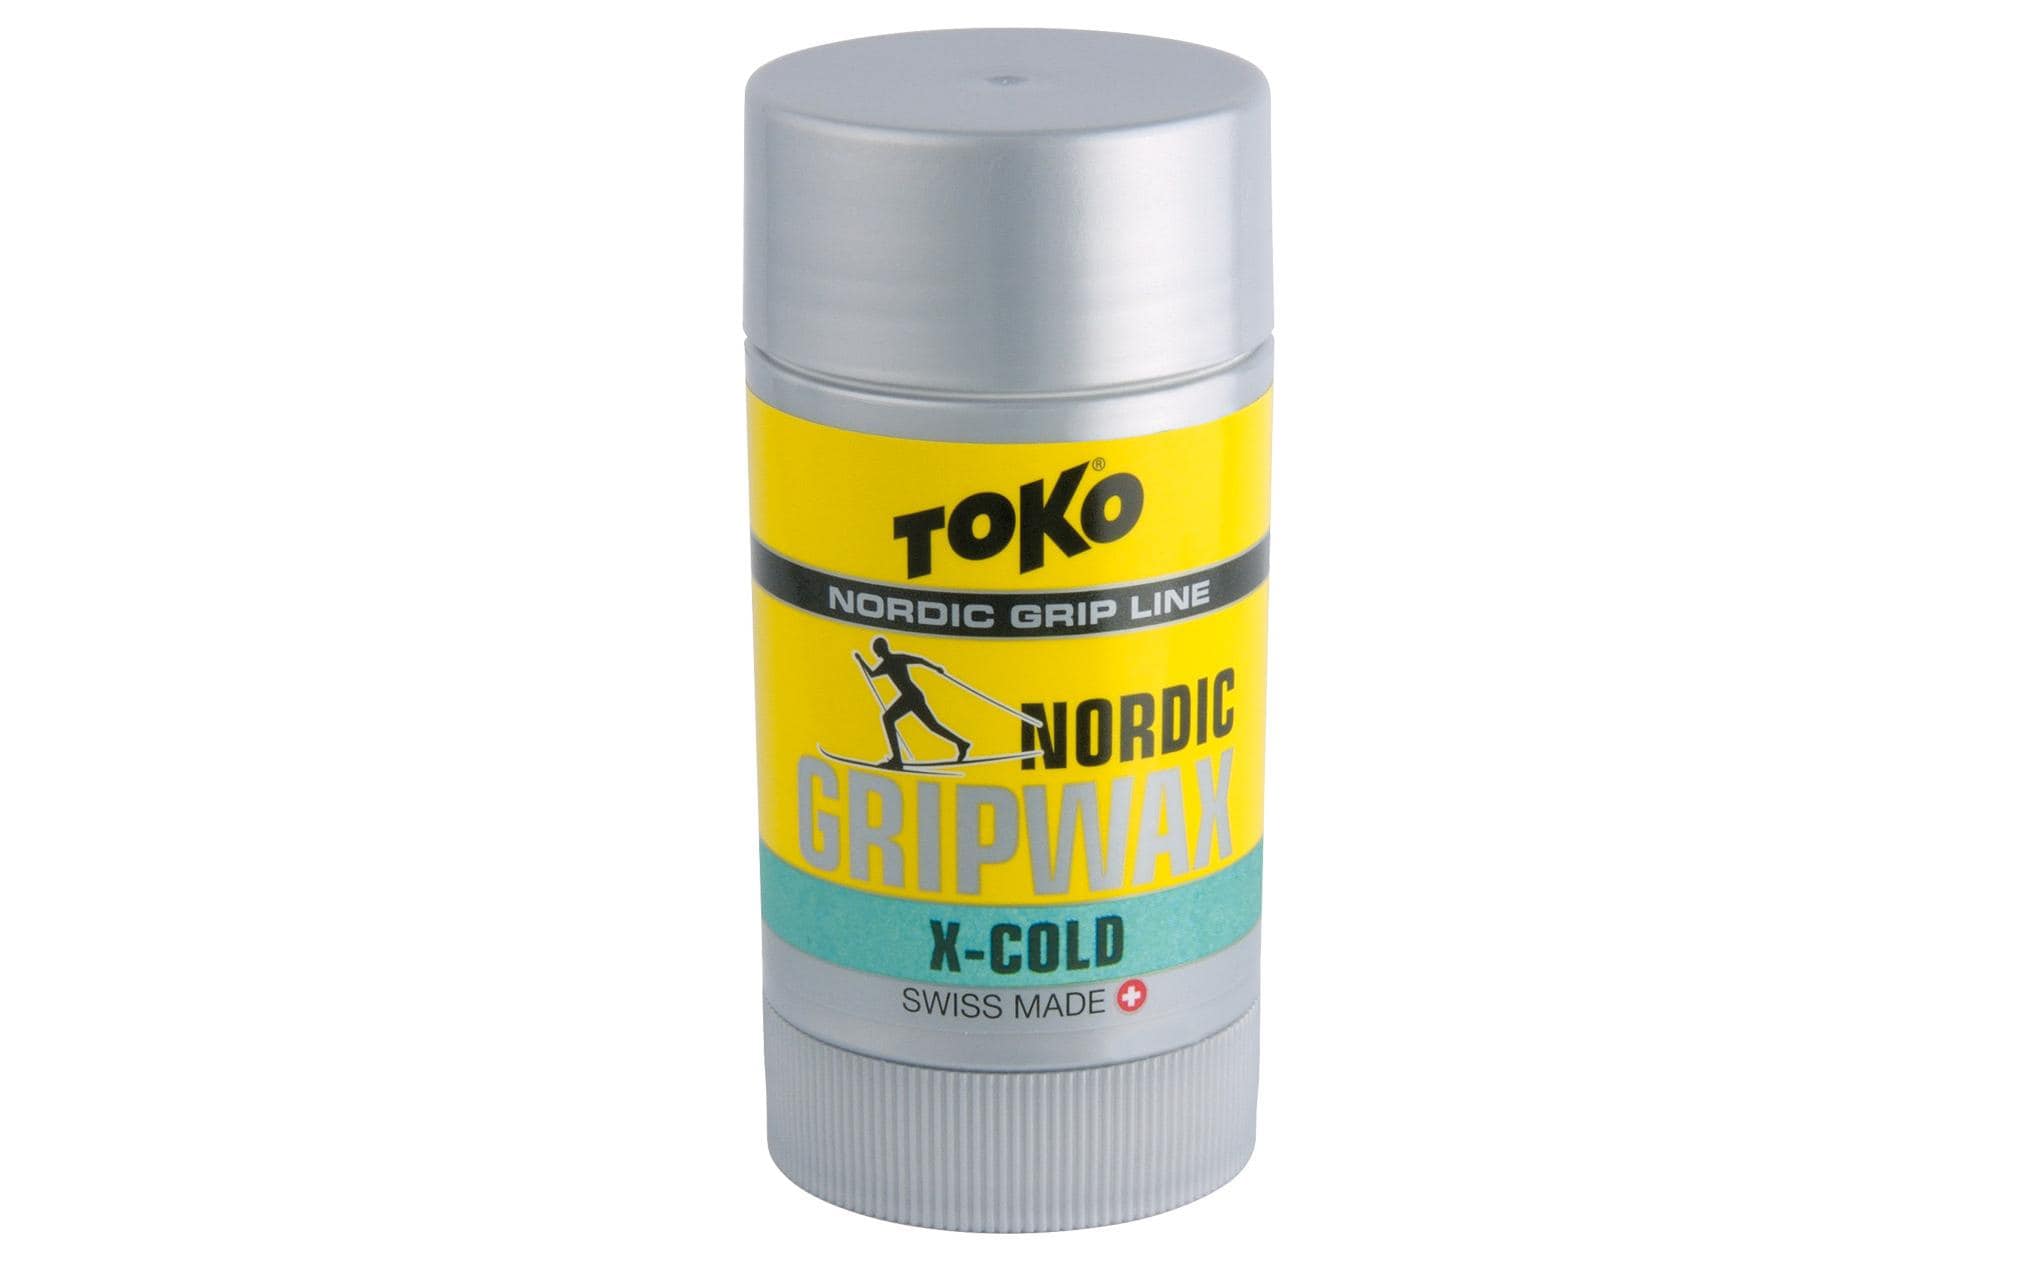 TOKO Nordic Grip Wax X-Cold 25 g